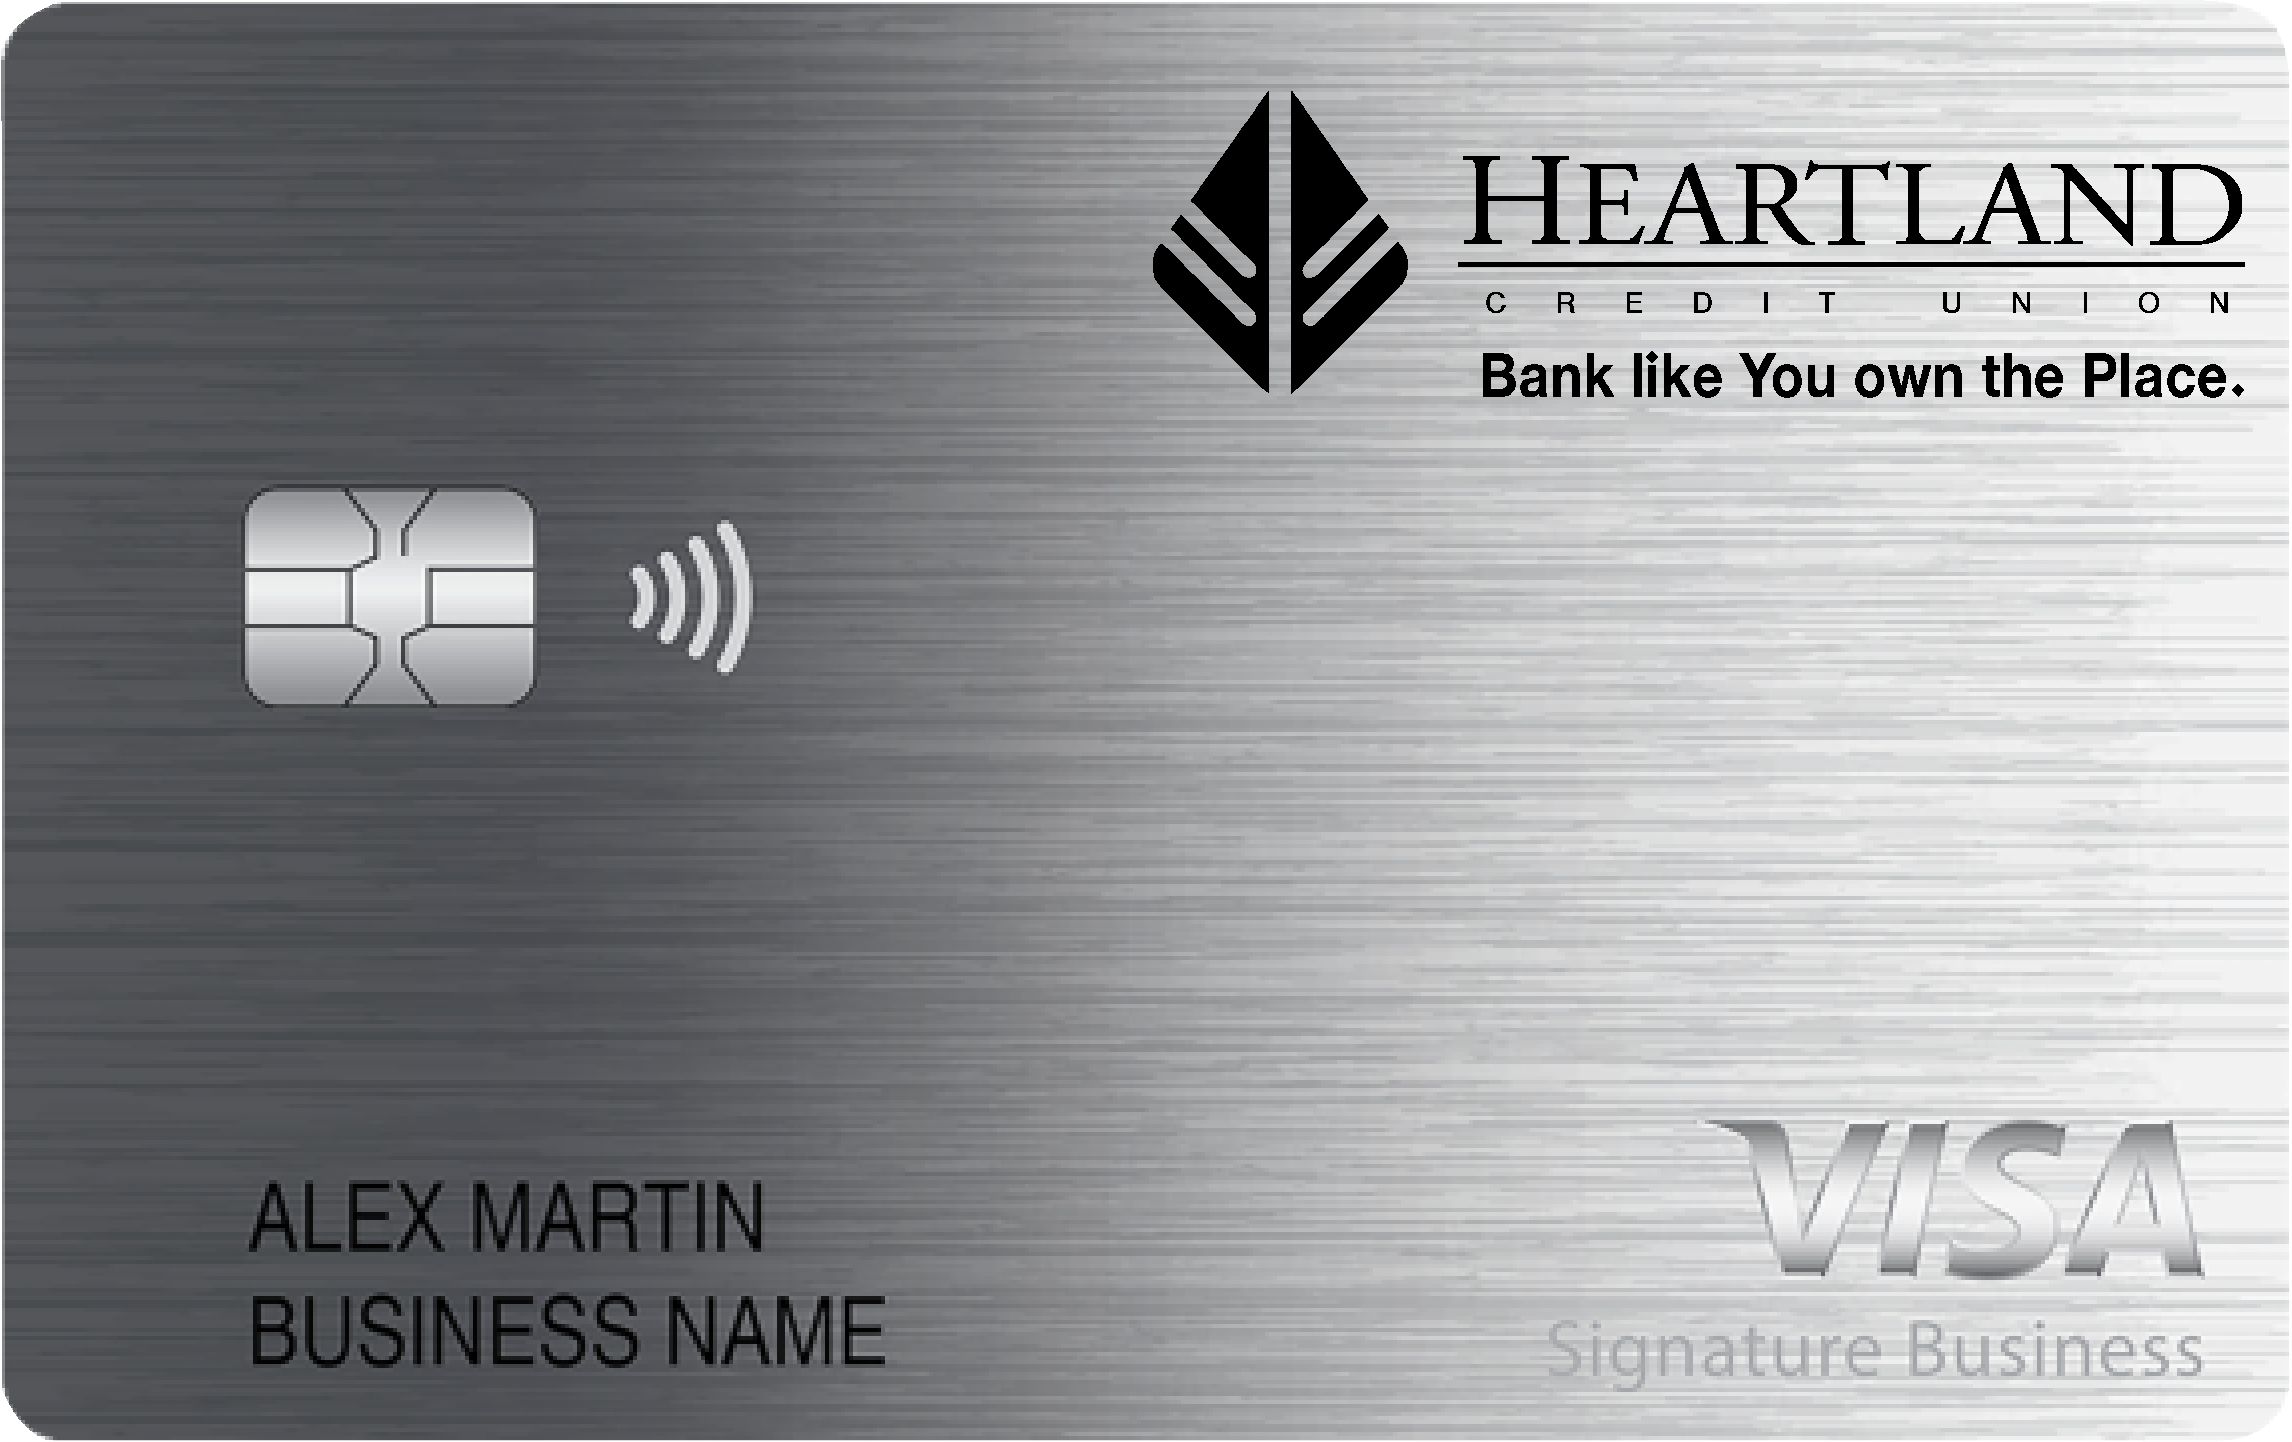 Heartland Credit Union Smart Business Rewards Card